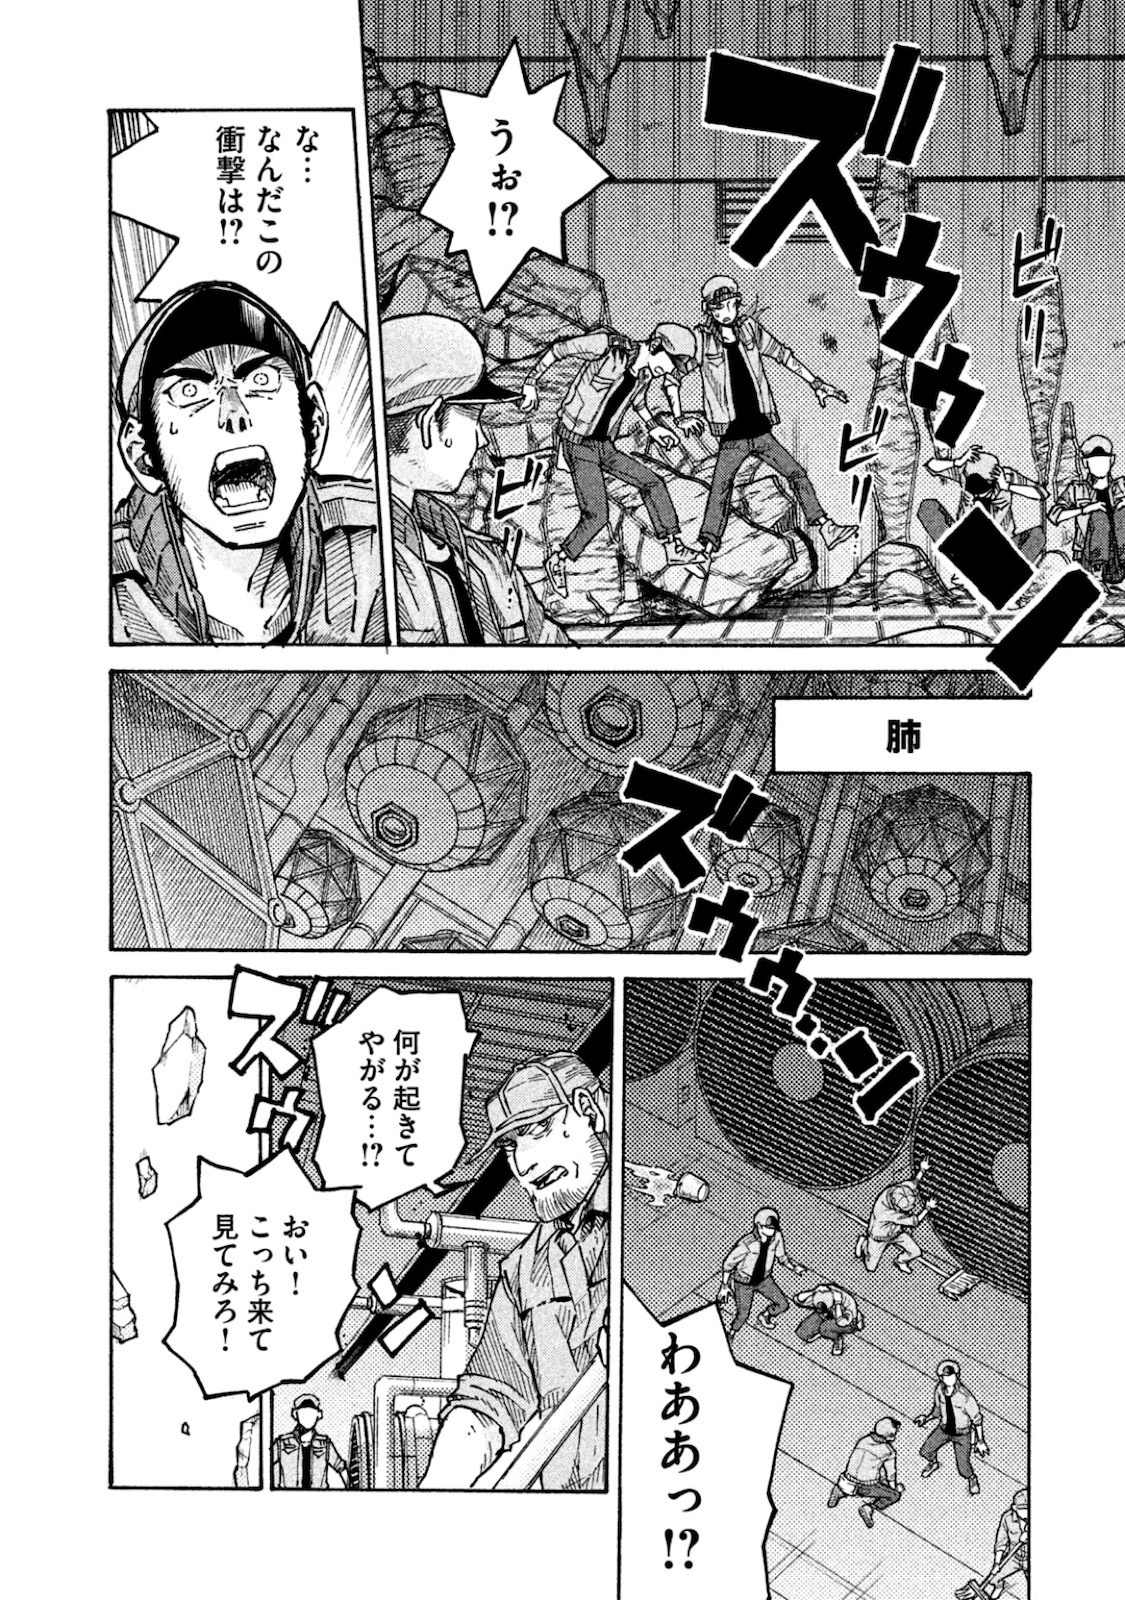 Hataraku Saibou BLACK - Chapter 10 - Page 4